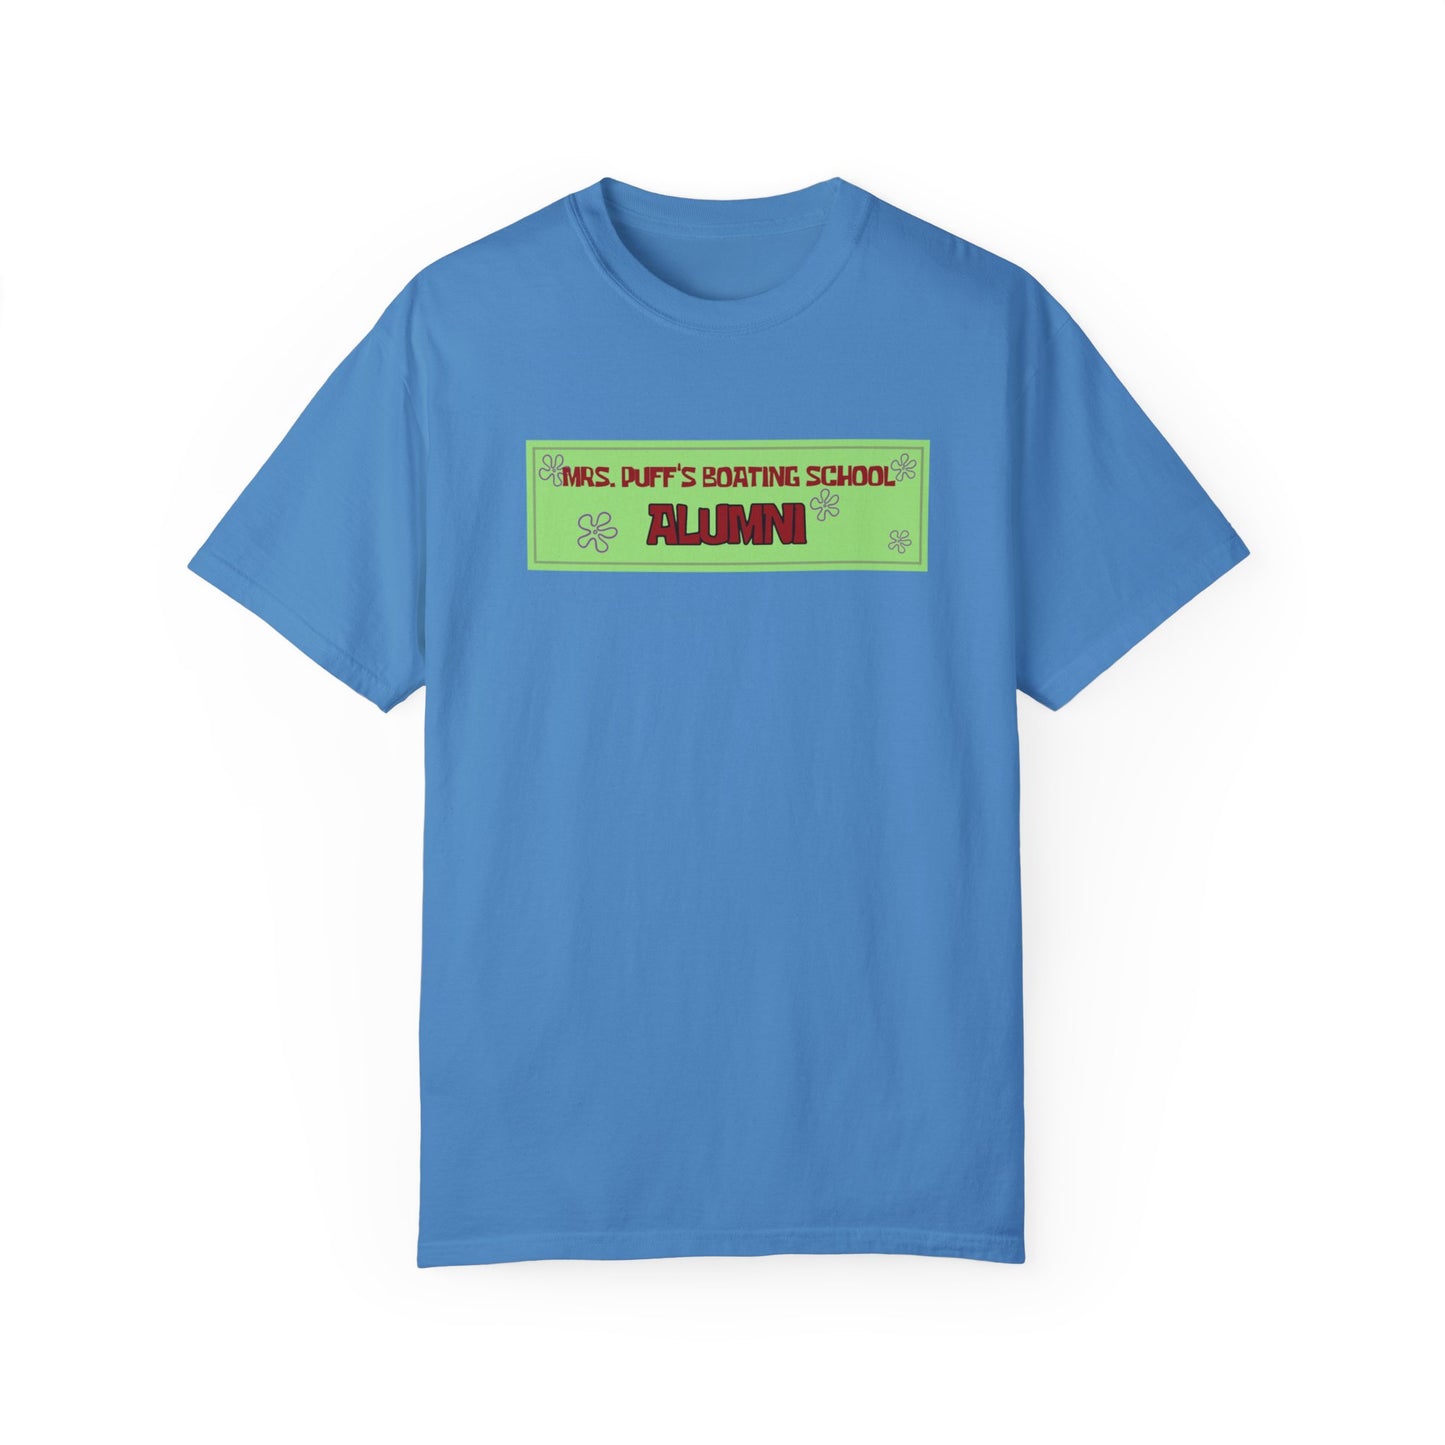 Boating School Alumni Comfort Colors Tshirt